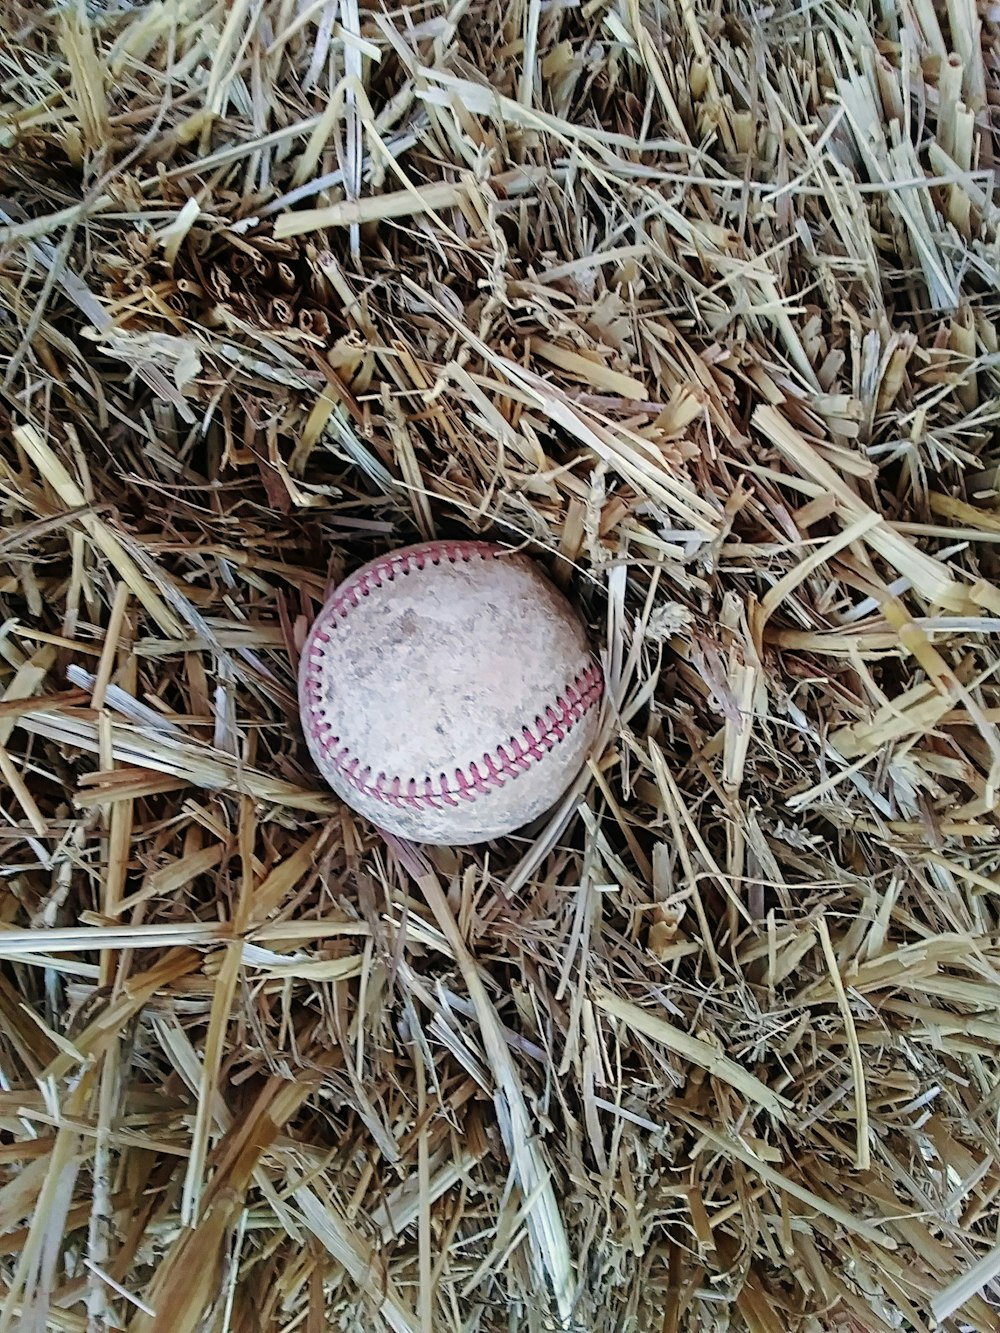 Una pelota de béisbol en la hierba